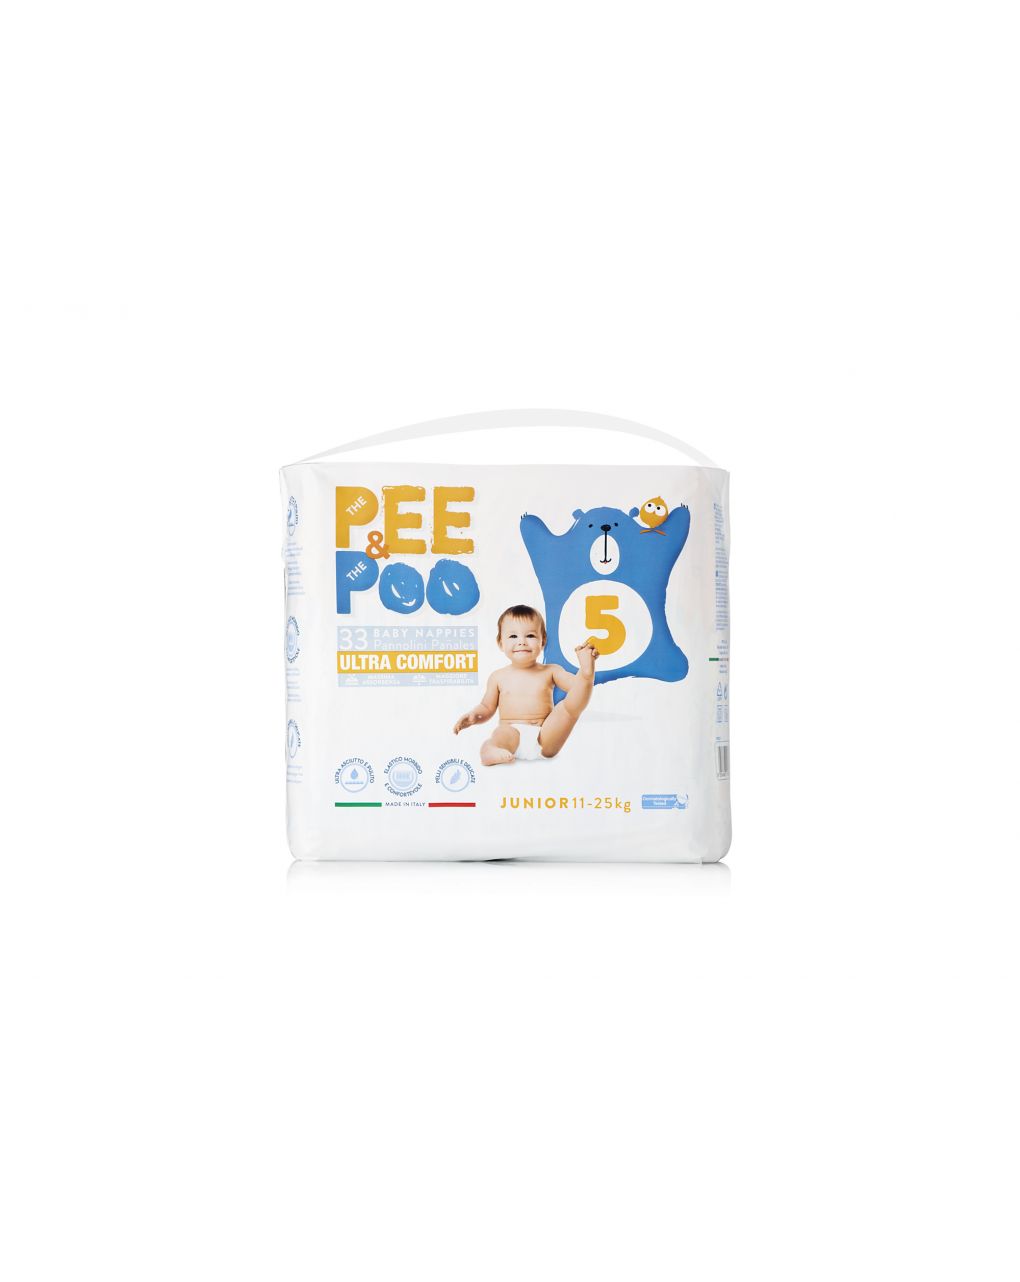 Pee&poo – πάνες μέγεθος junior 33 τμχ - The Pee & The Poo